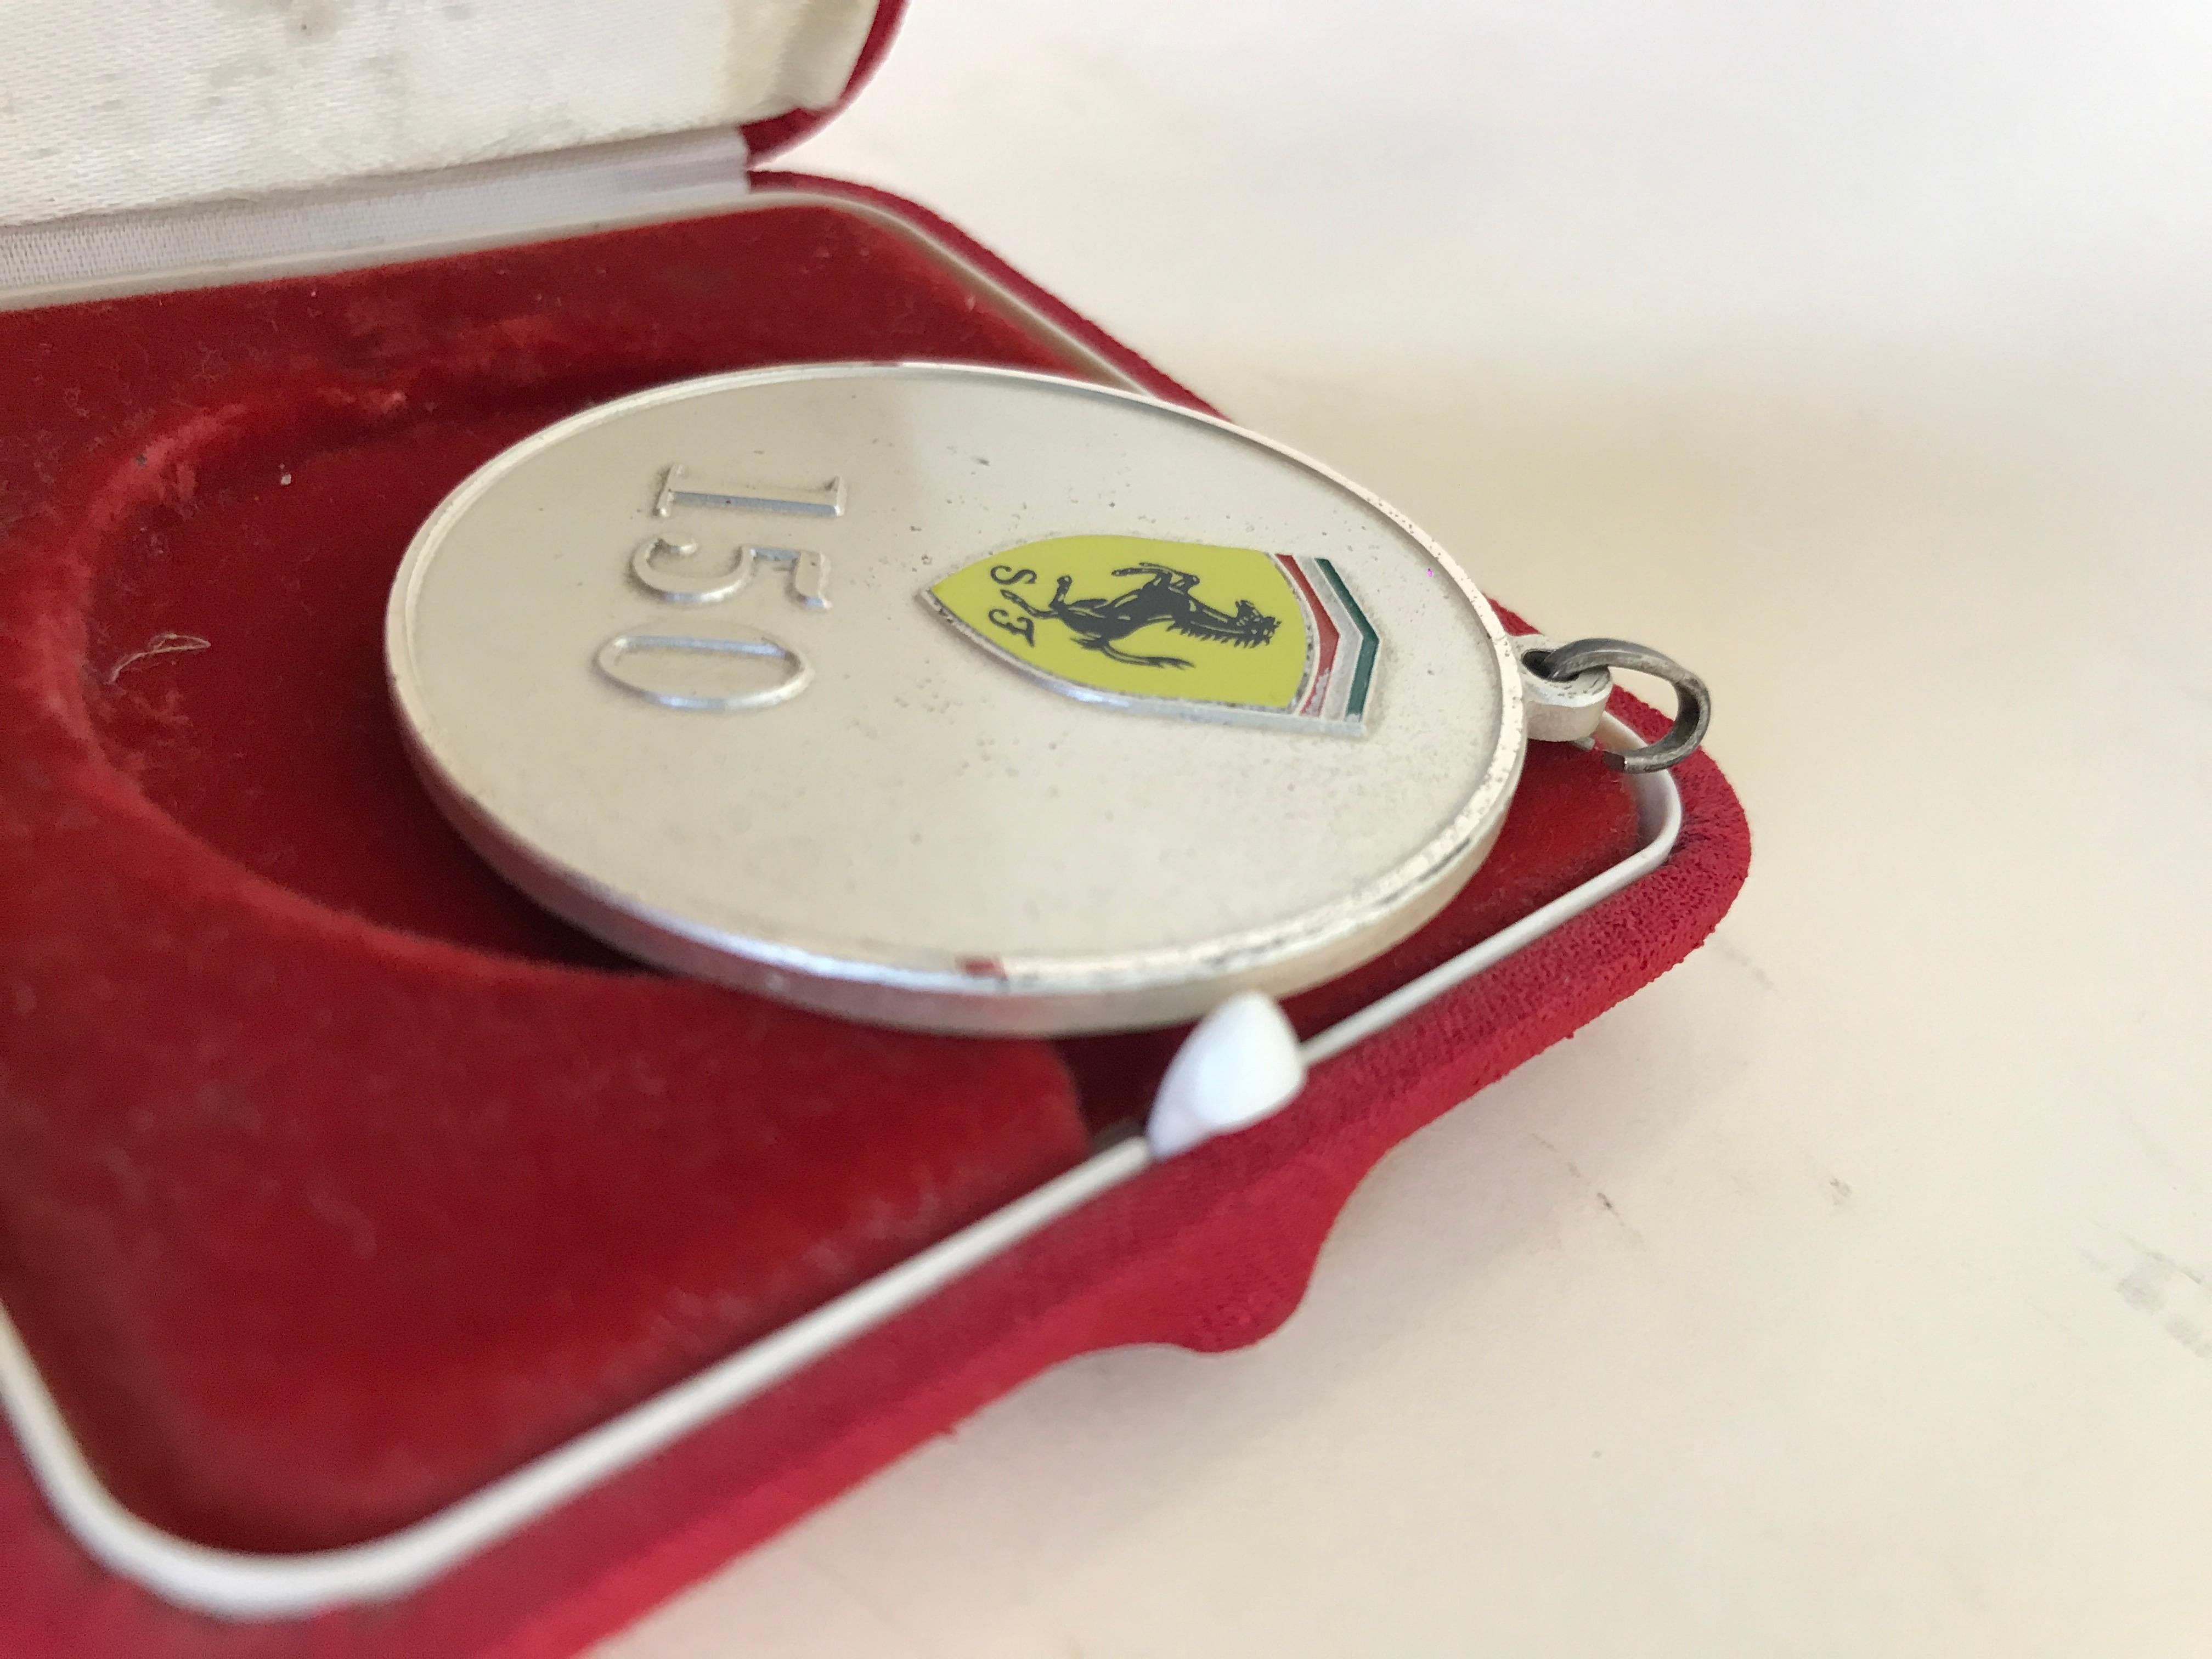 2002 Vintage Ferrari Commemorative Medal Celebrating the 150th Victory of GP For Sale 4